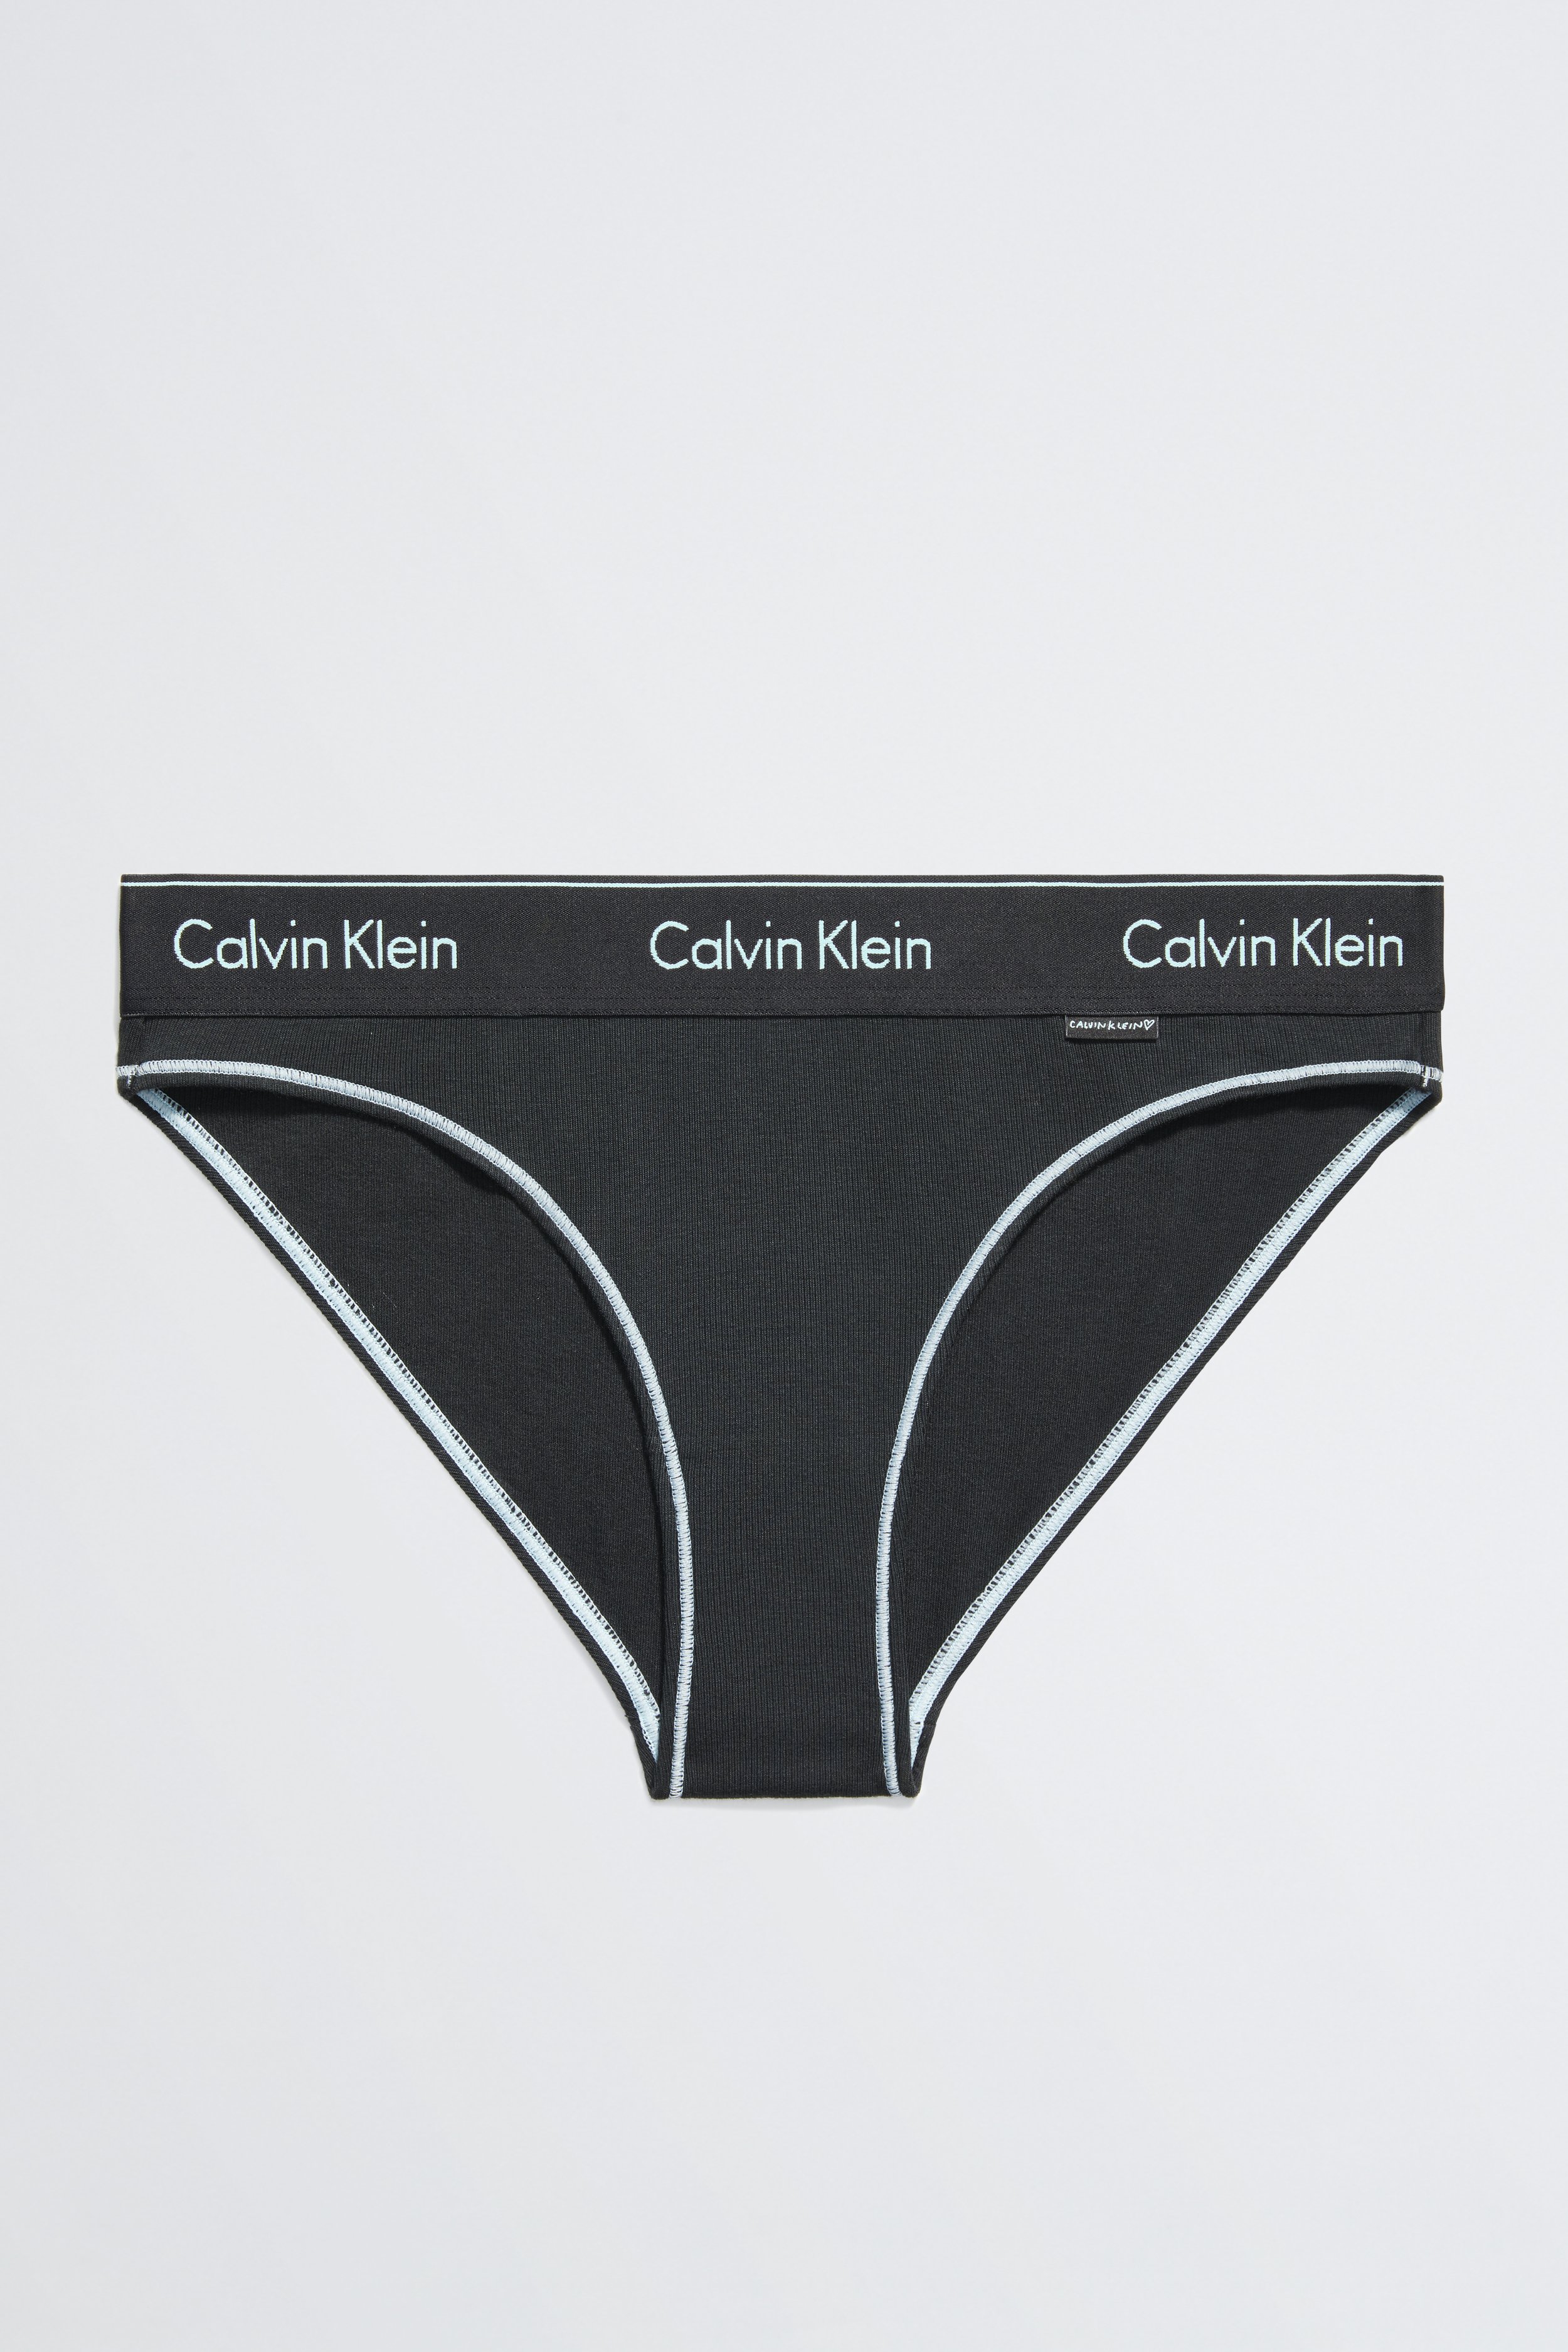 Jennie for Calvin Klein_2x2 Rib Bikini_Black Beauty.jpg